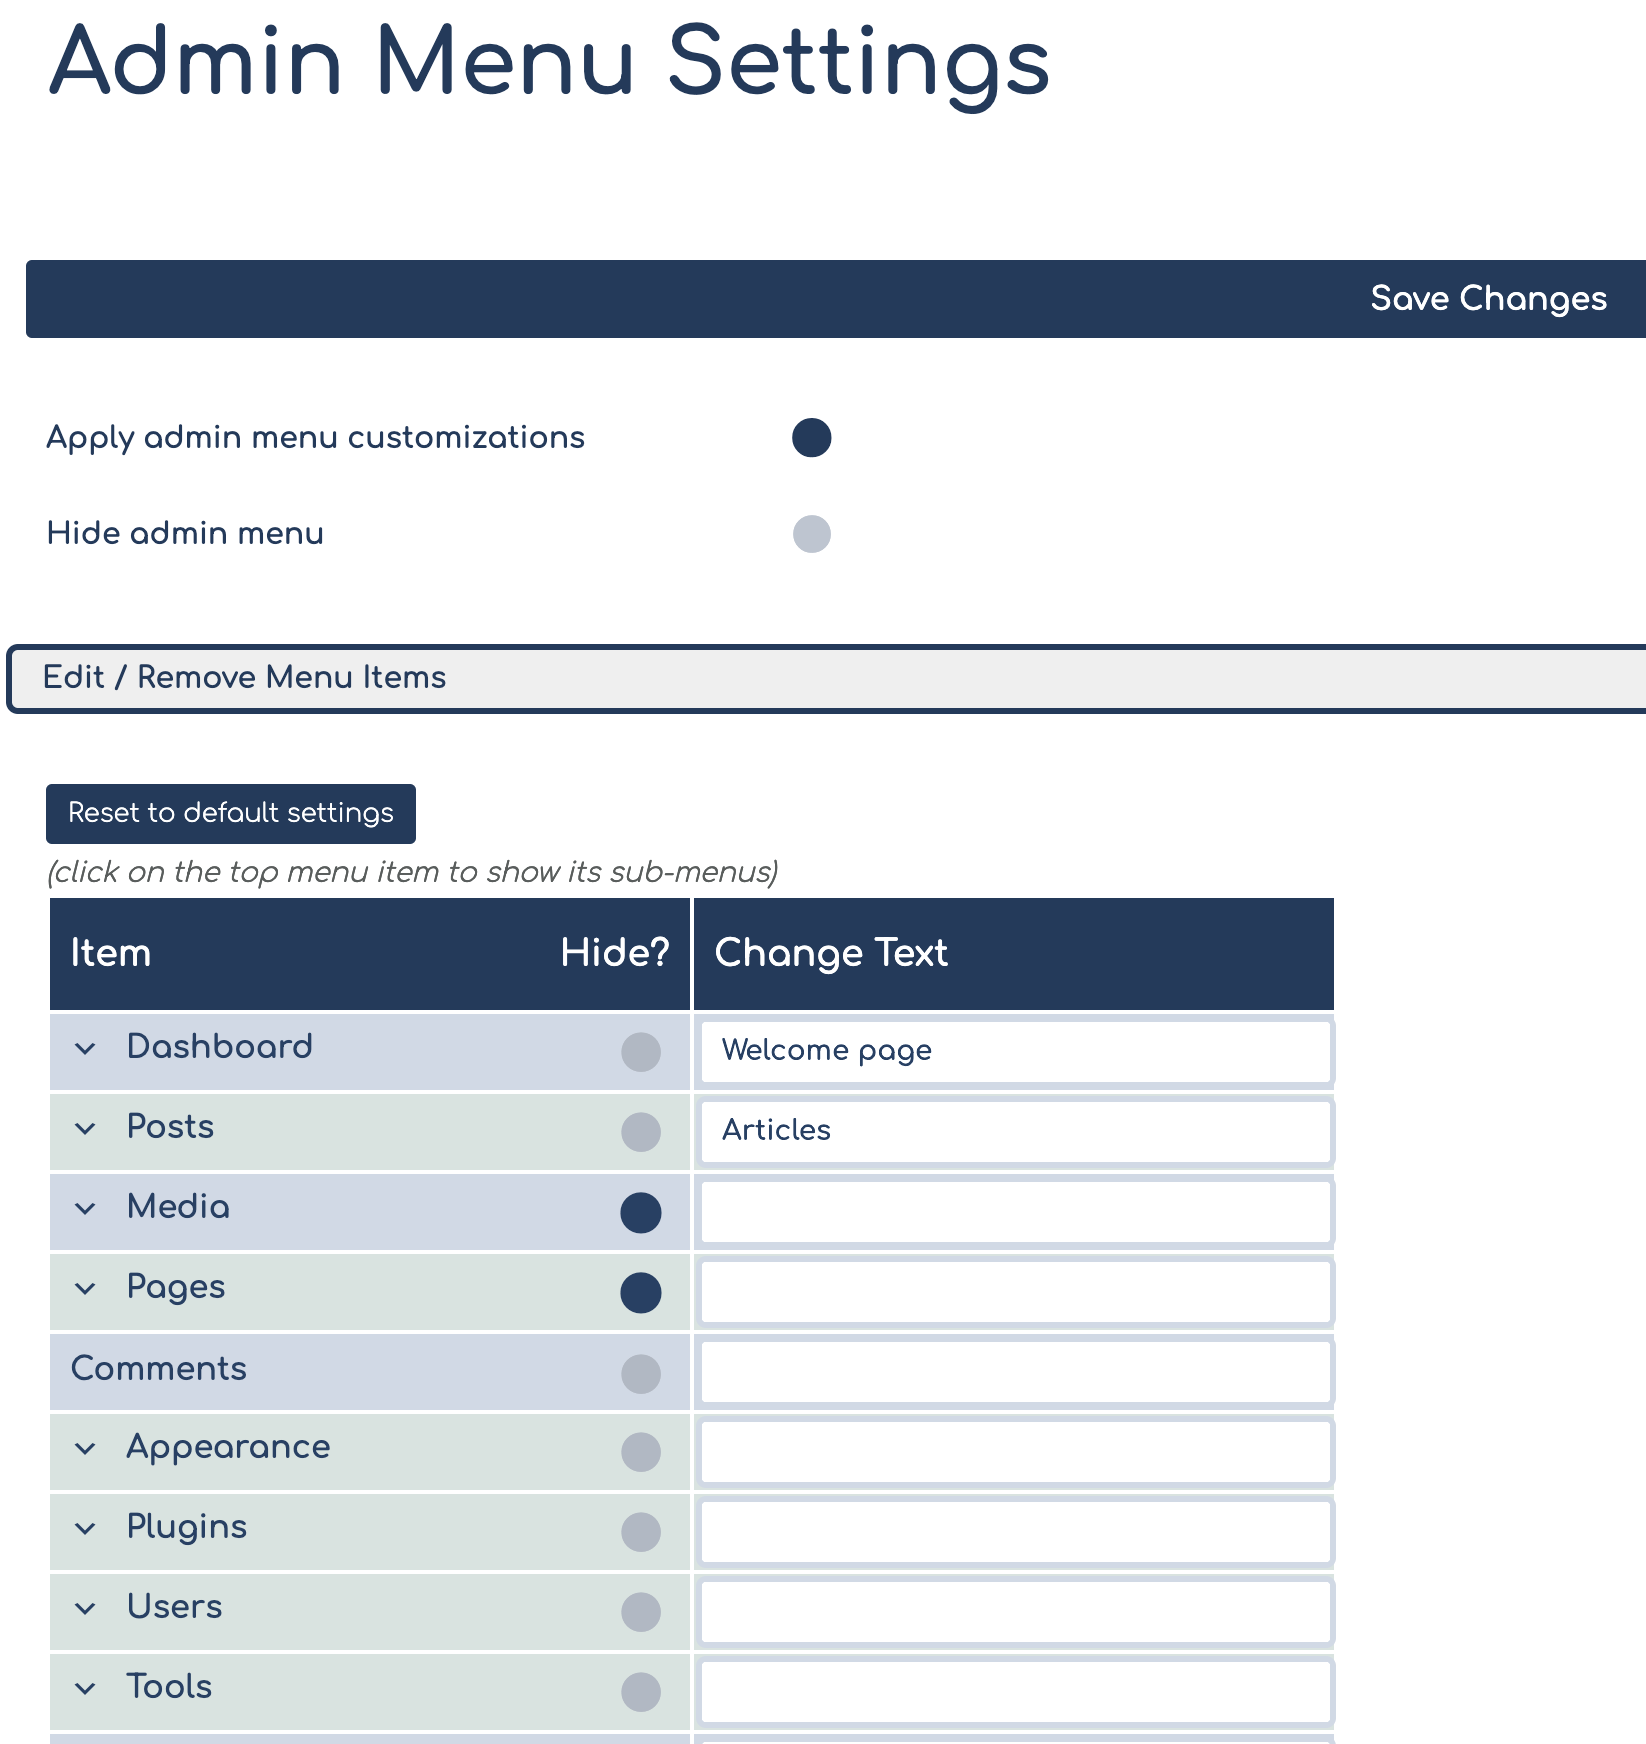 Admin menu editor and additional settings